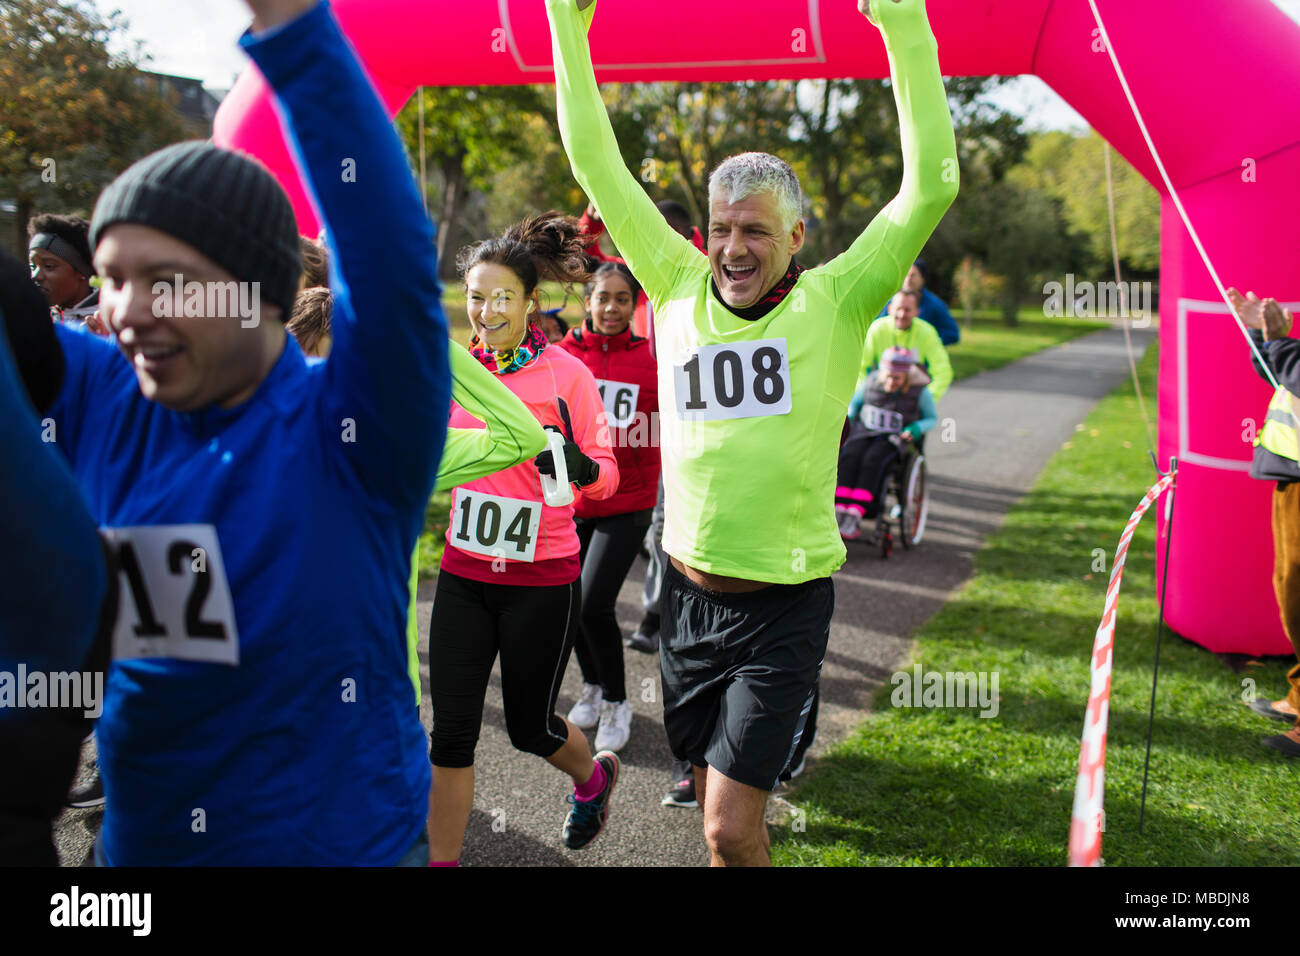 Enthusiastic runners cheering, crossing charity run finish line Stock Photo